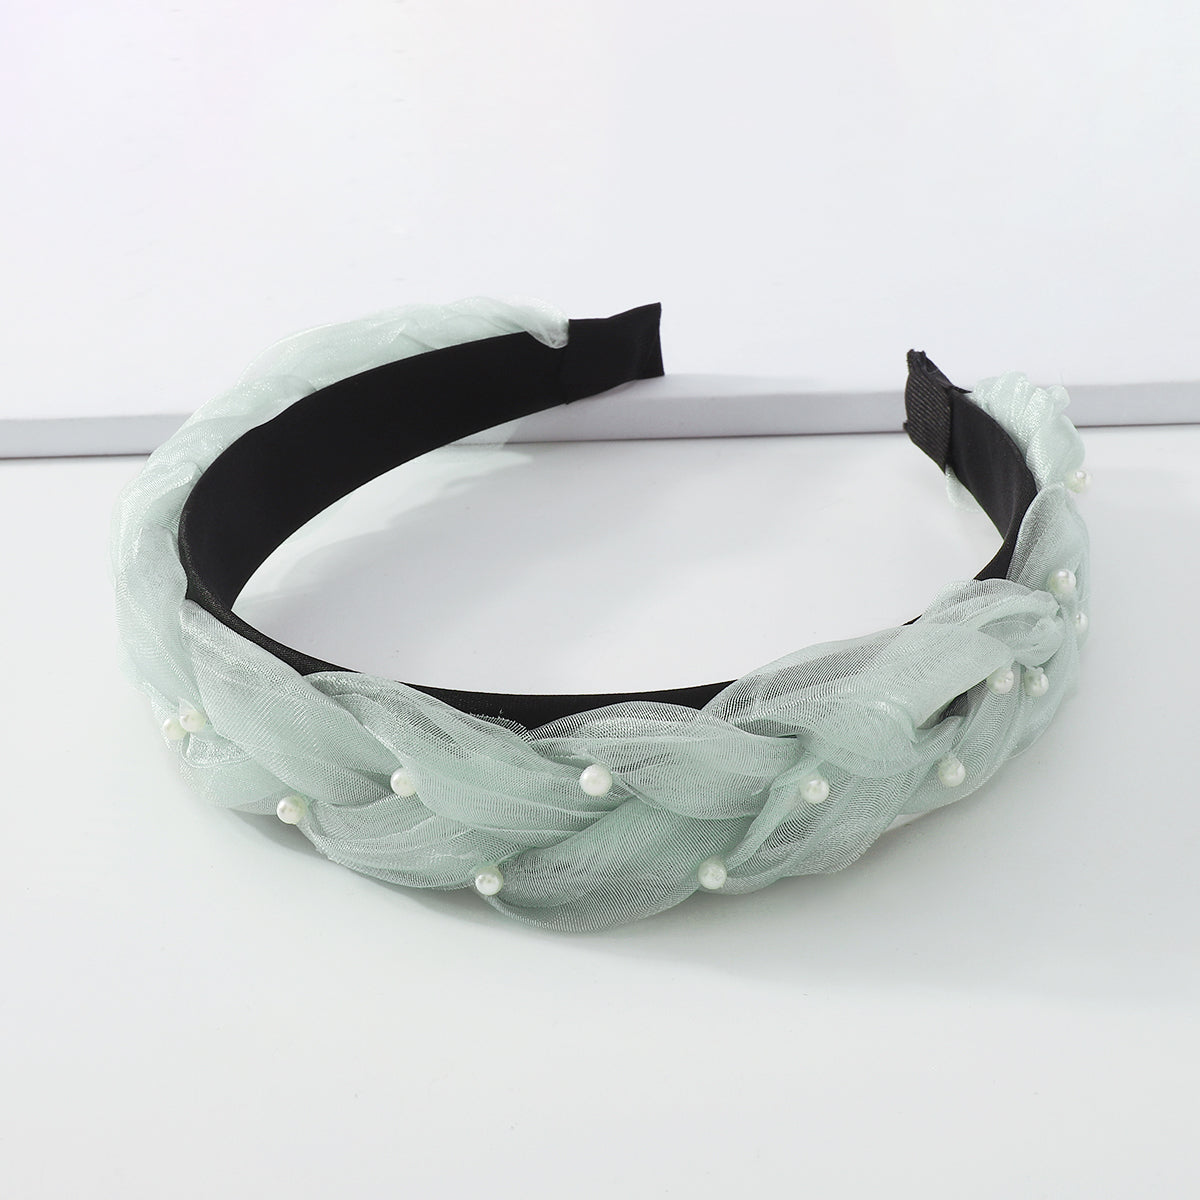 Faux Pearls Chiffon Braided Headband medyjewelry